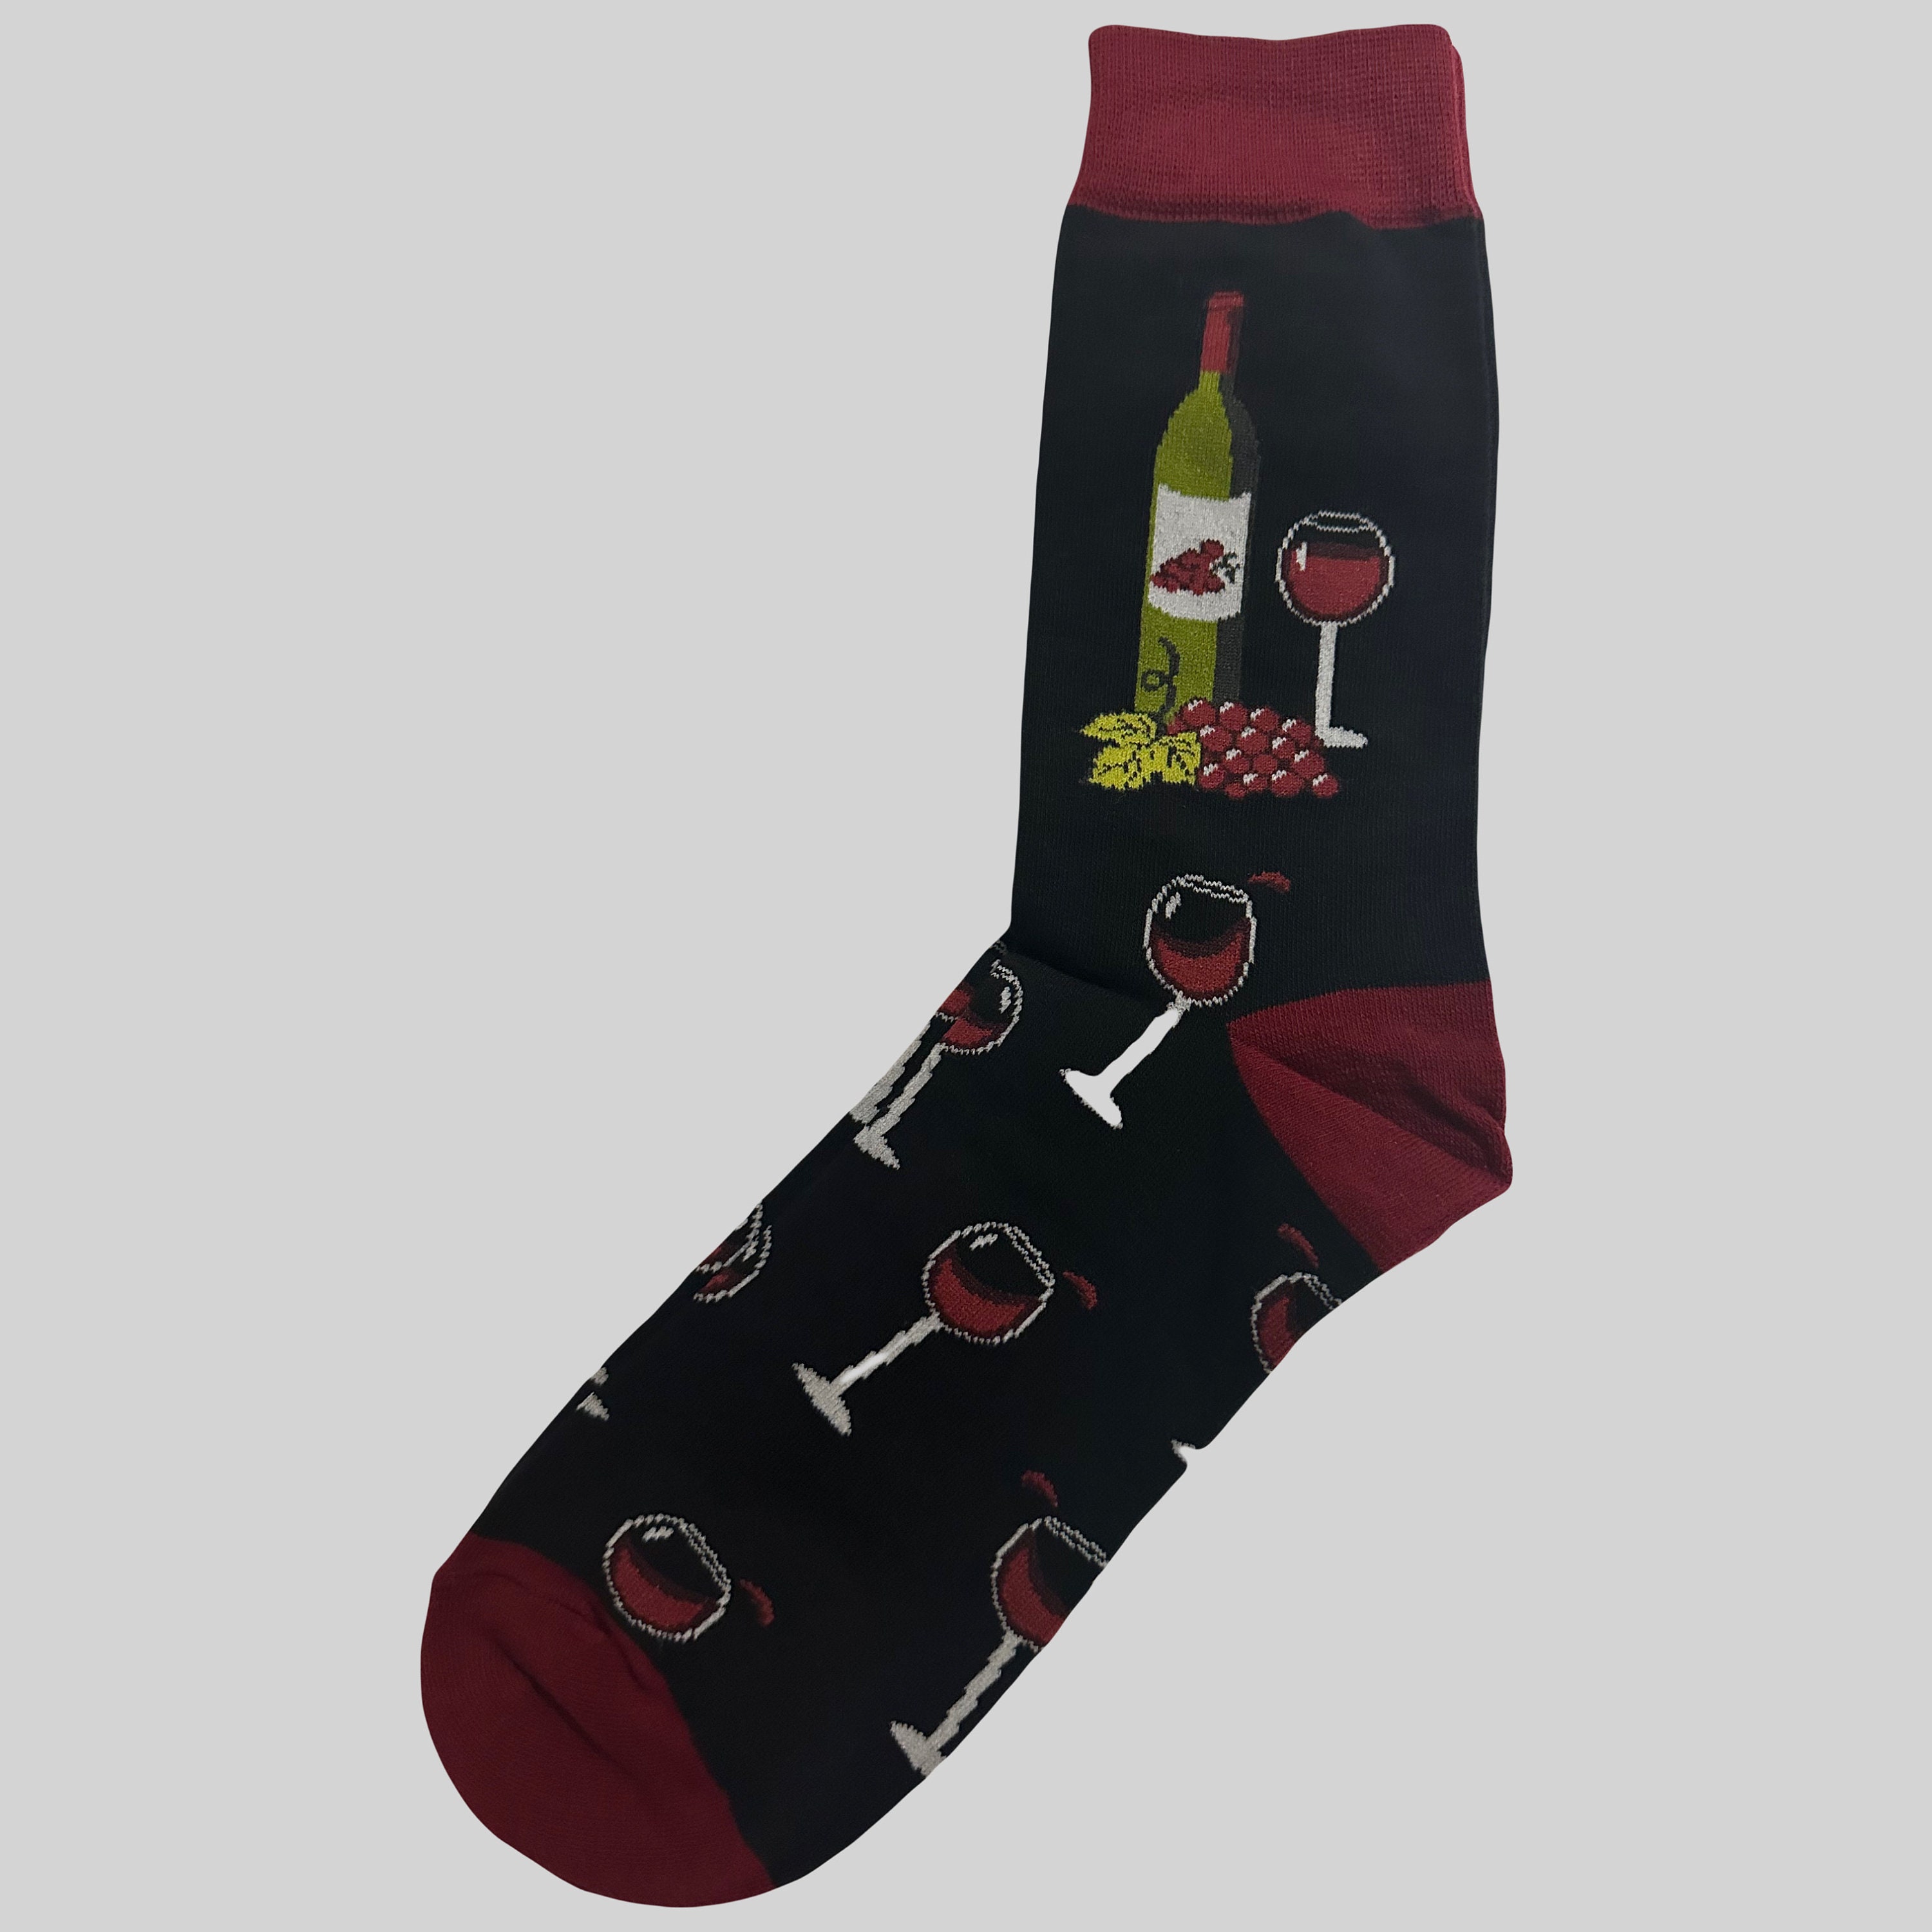 Gift Wine Socks With Ribbon Funny Novelty Luxury Socks Funny Lovers Gifts  for Women Men Under 10 Dollars